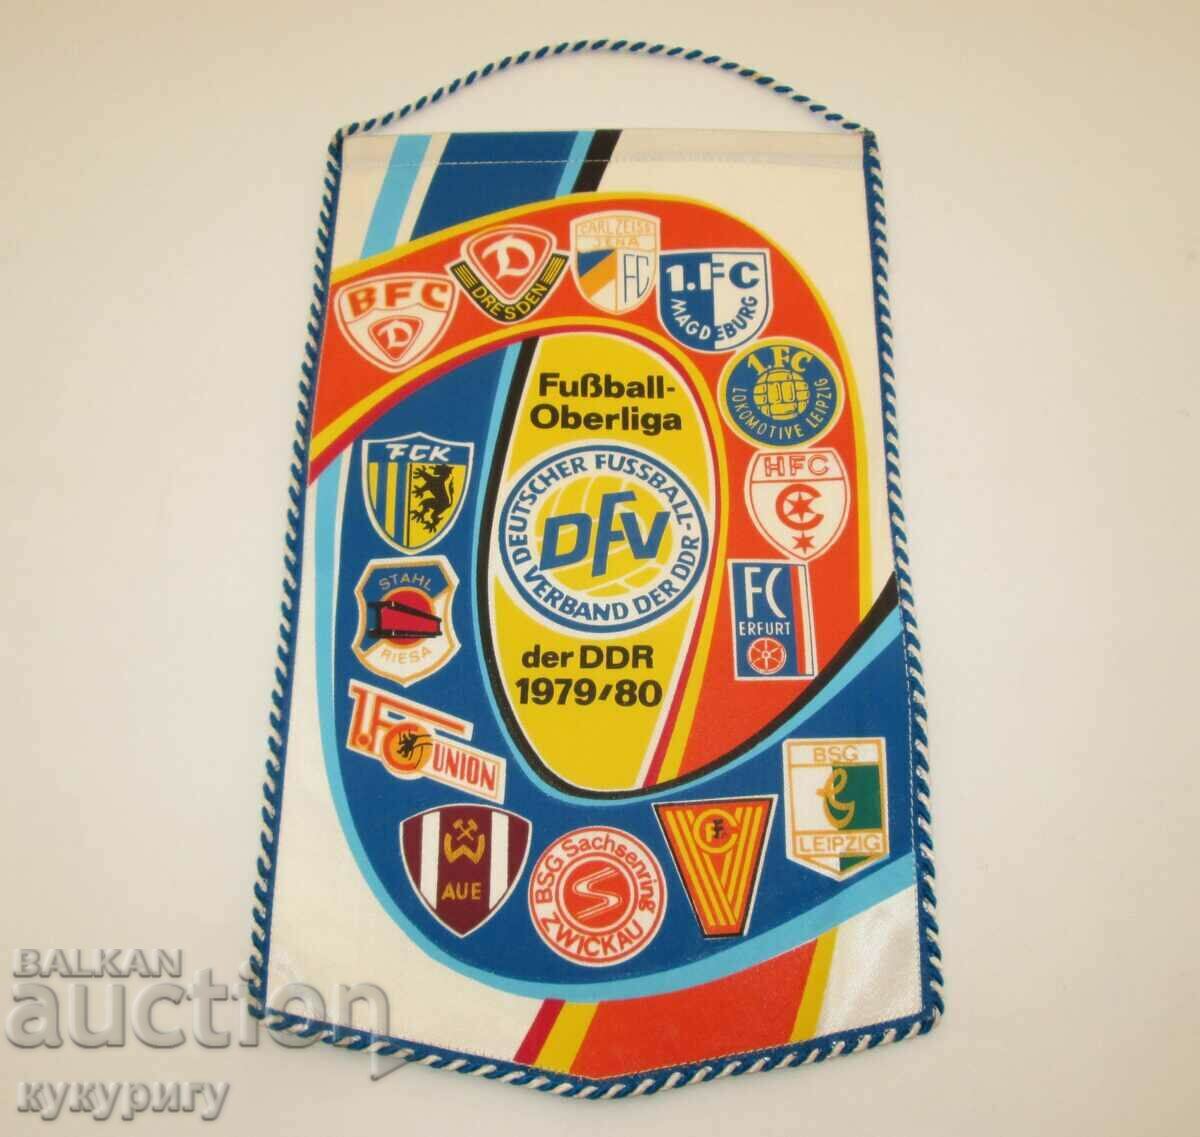 Rar vechi steag de fotbal Oberliga fotbal DFV GDR 1979/80